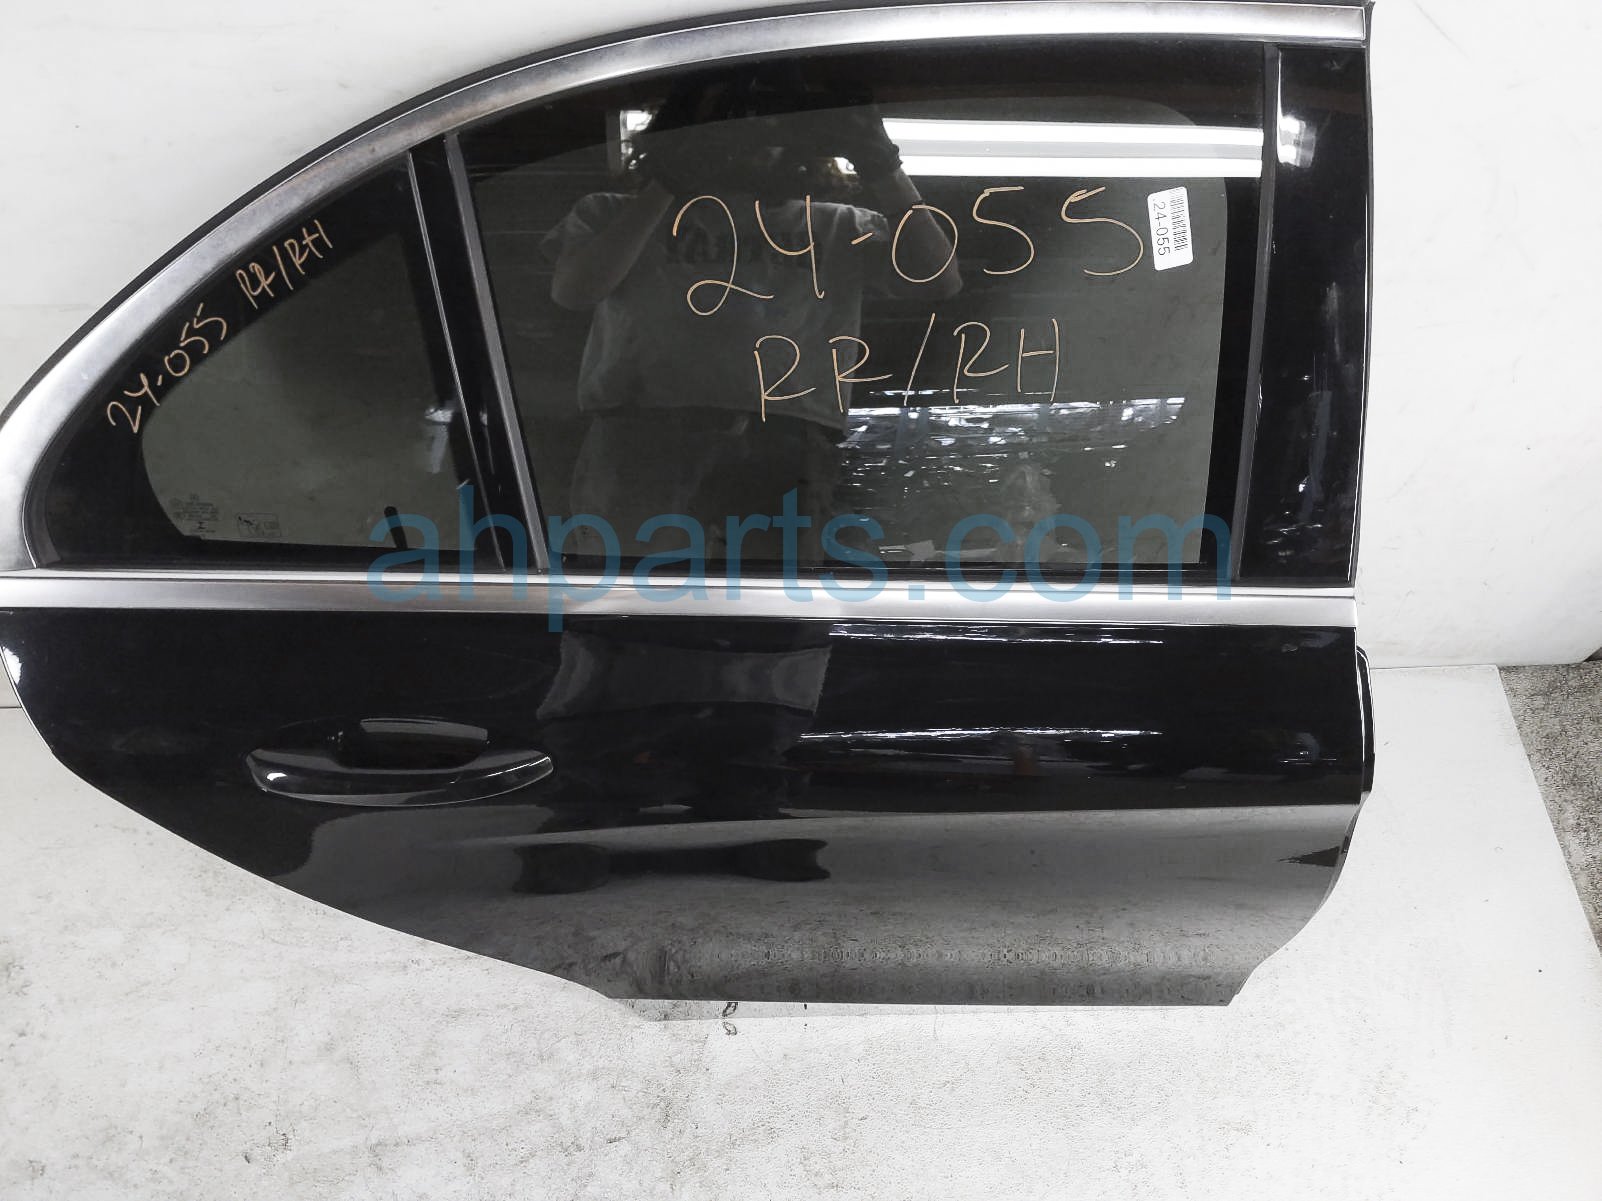 $700 Mercedes RR/RH DOOR - BLACK - NO INSIDE TRIM